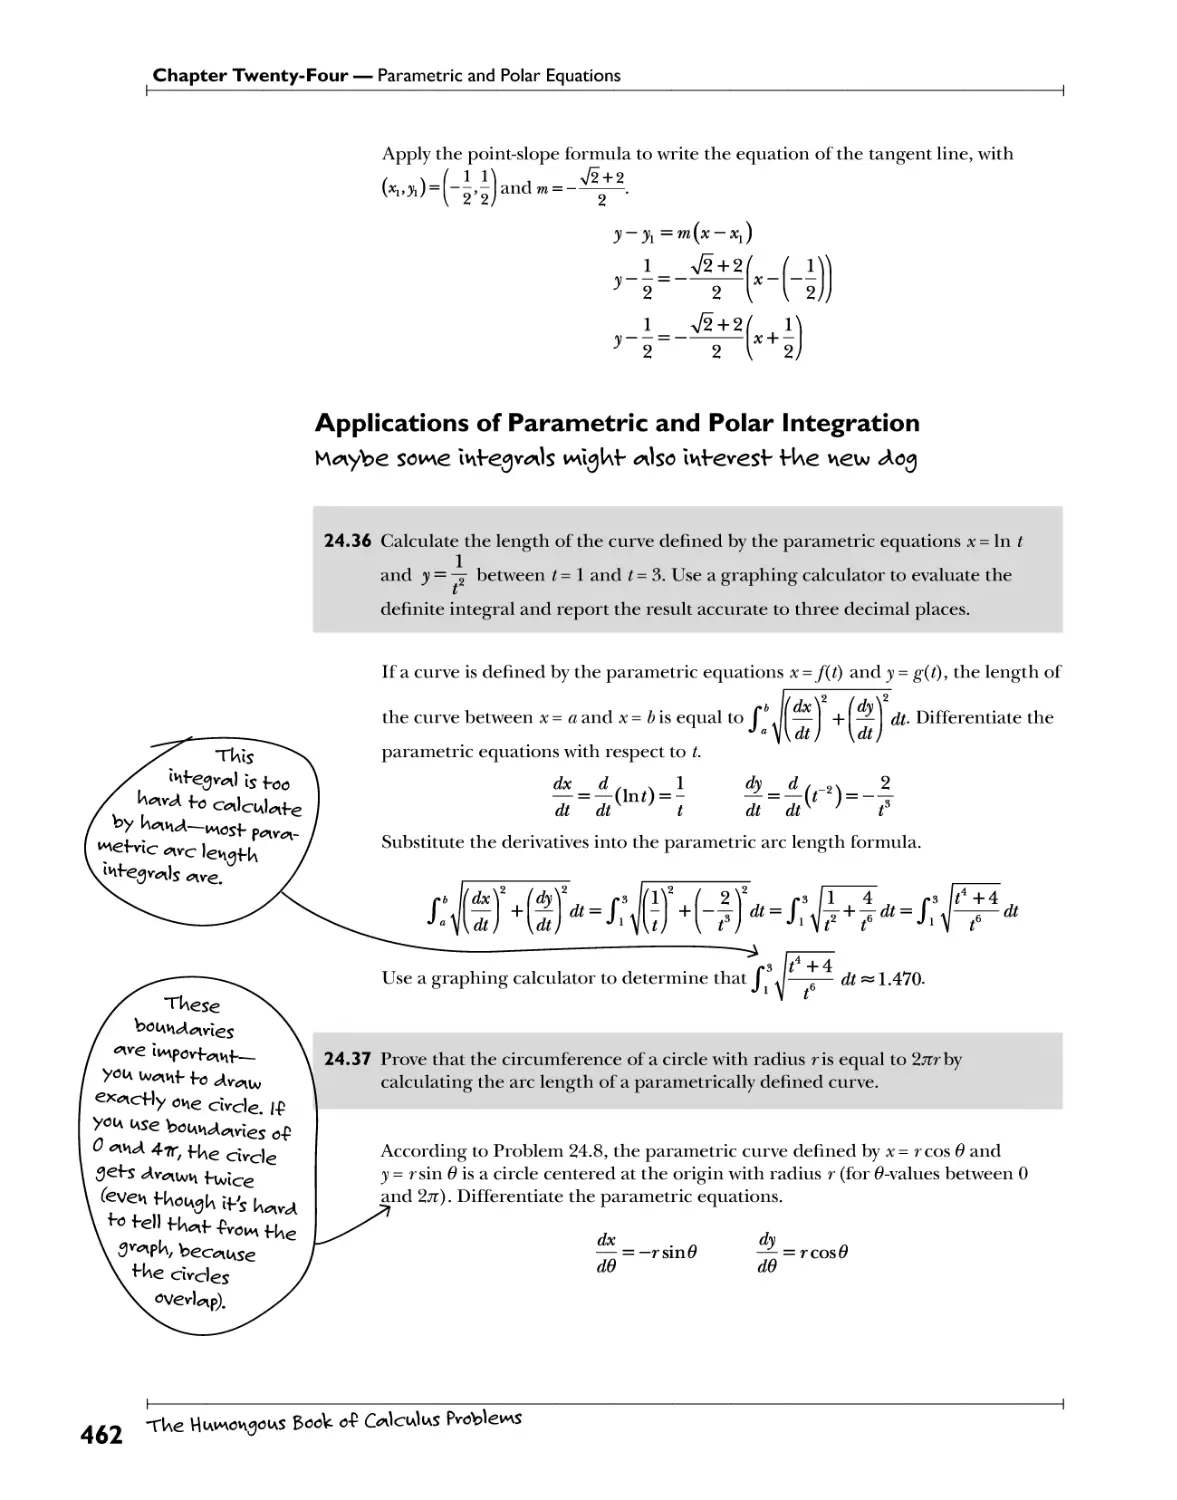 Applications of Parametric and Polar Integration 462